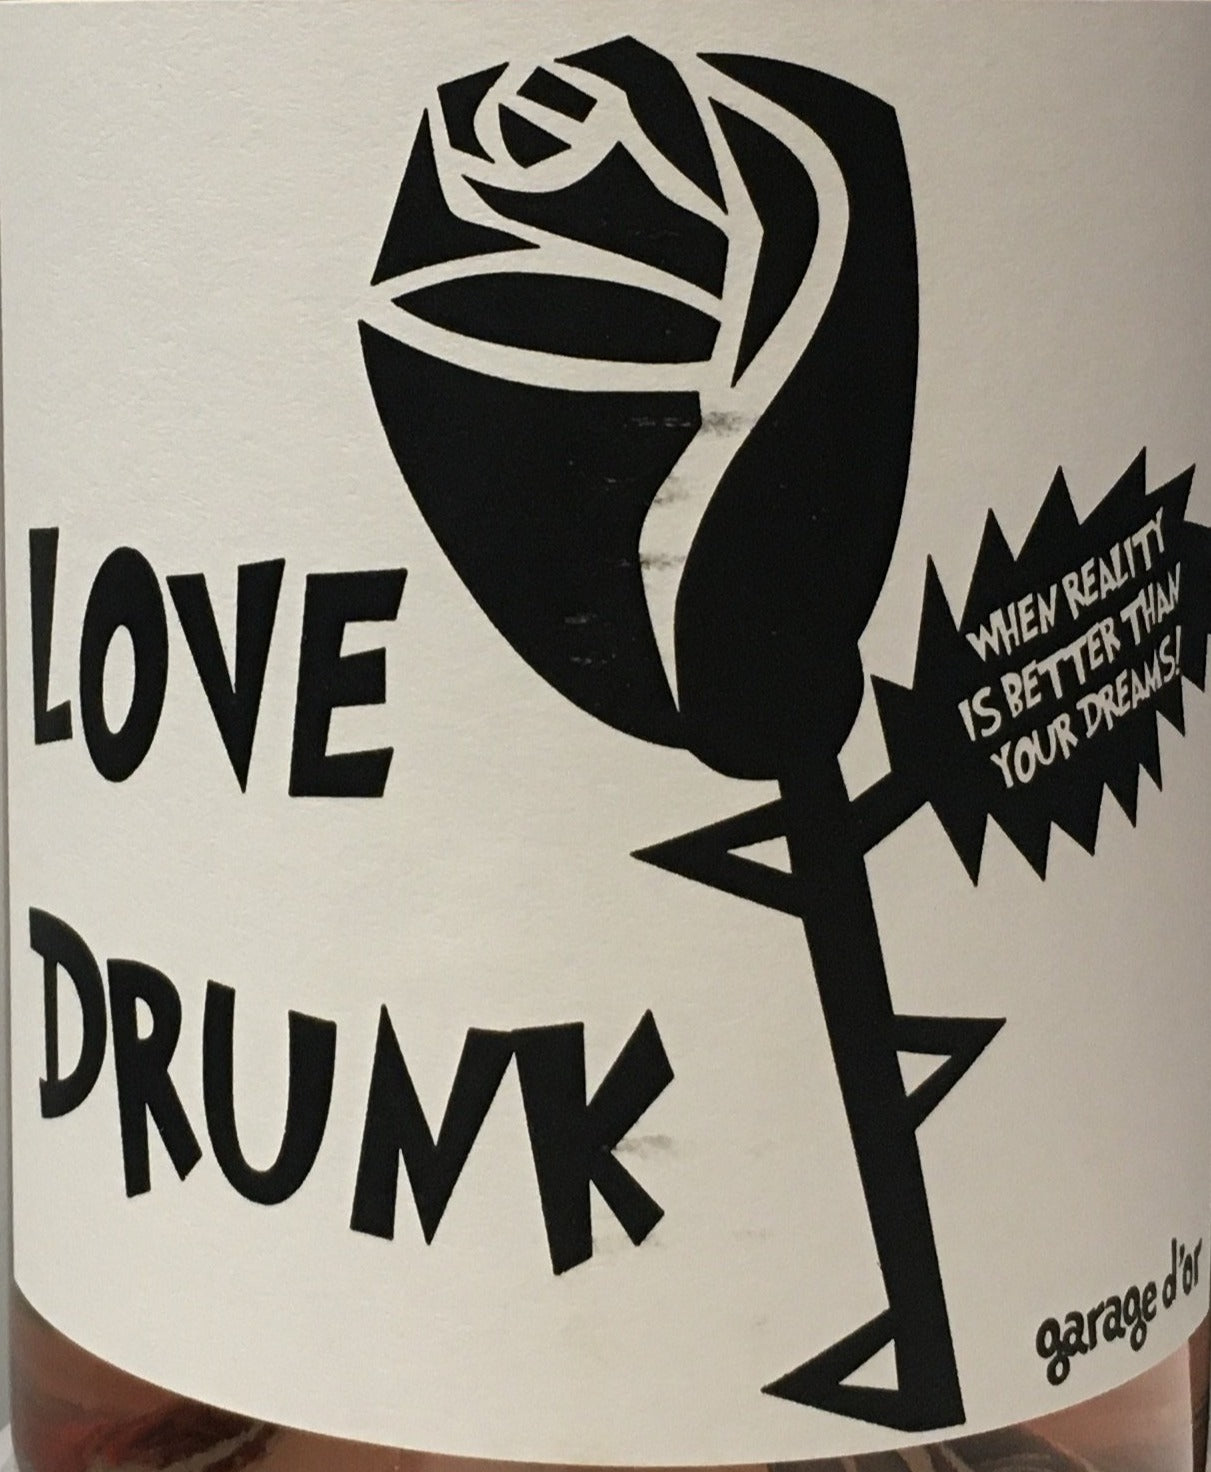 Maison Noir 'Love Drunk' - Rose